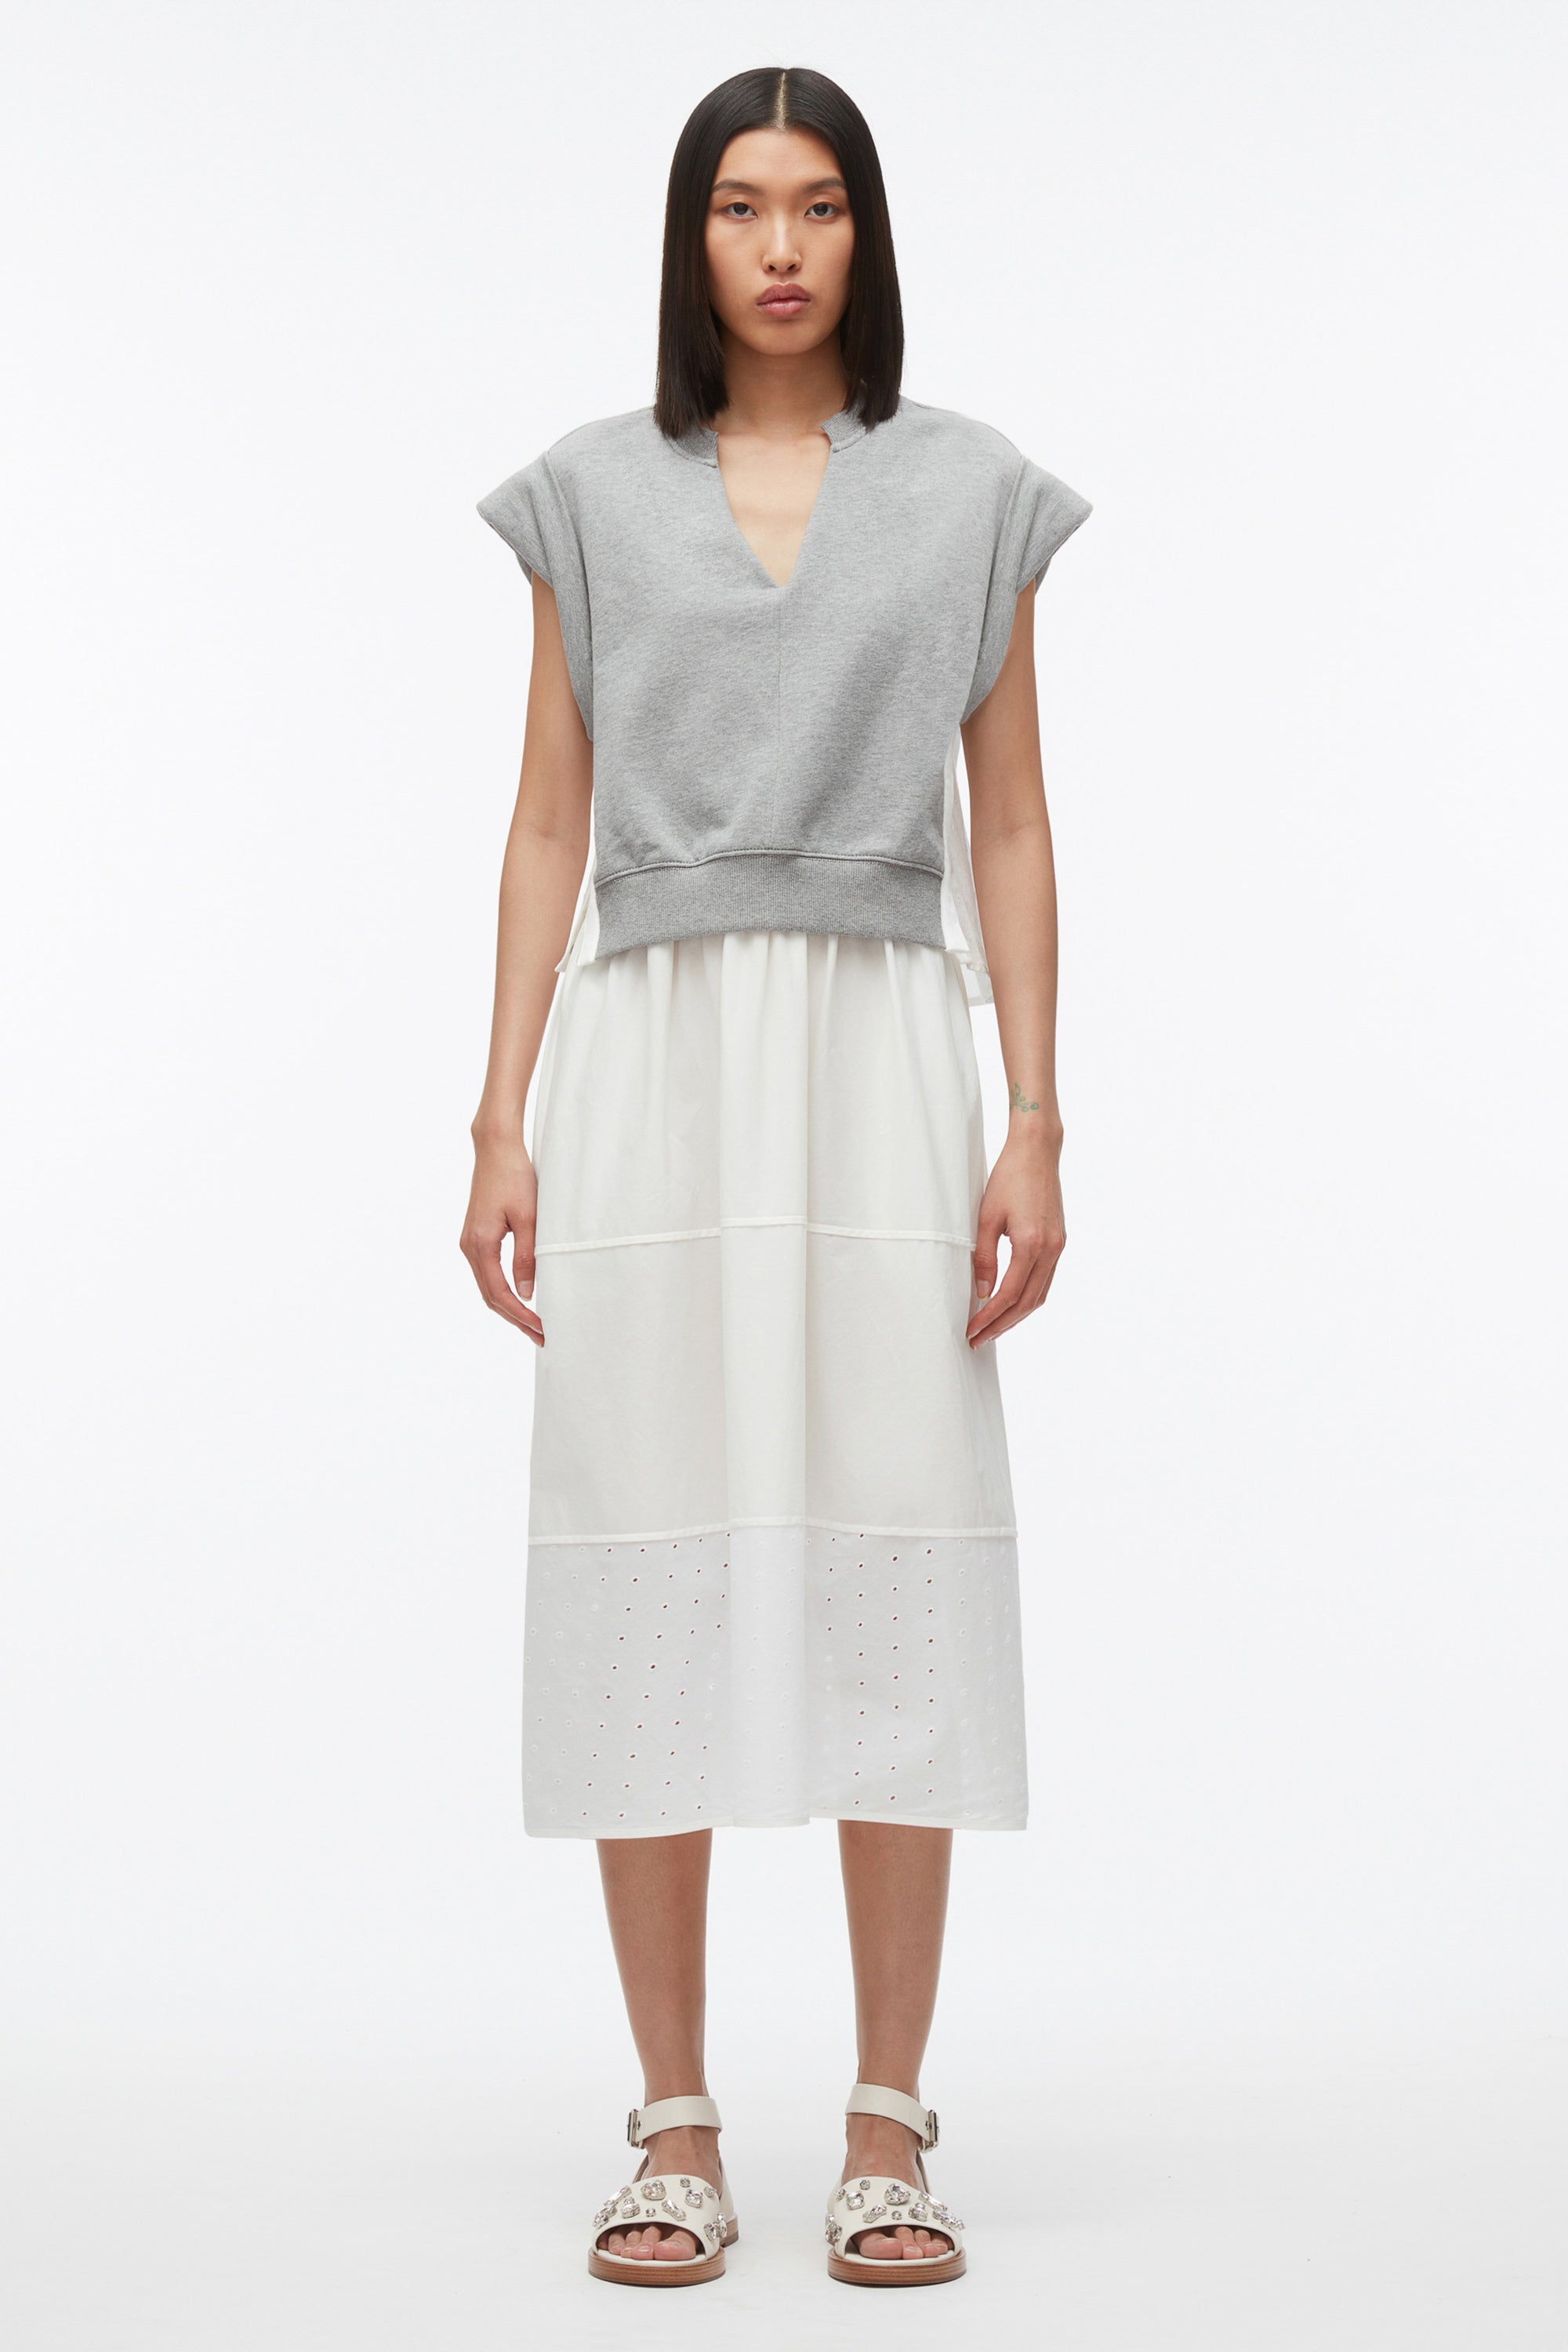 Rolled Sleeve Mix Media Dress – 3.1 Phillip Lim